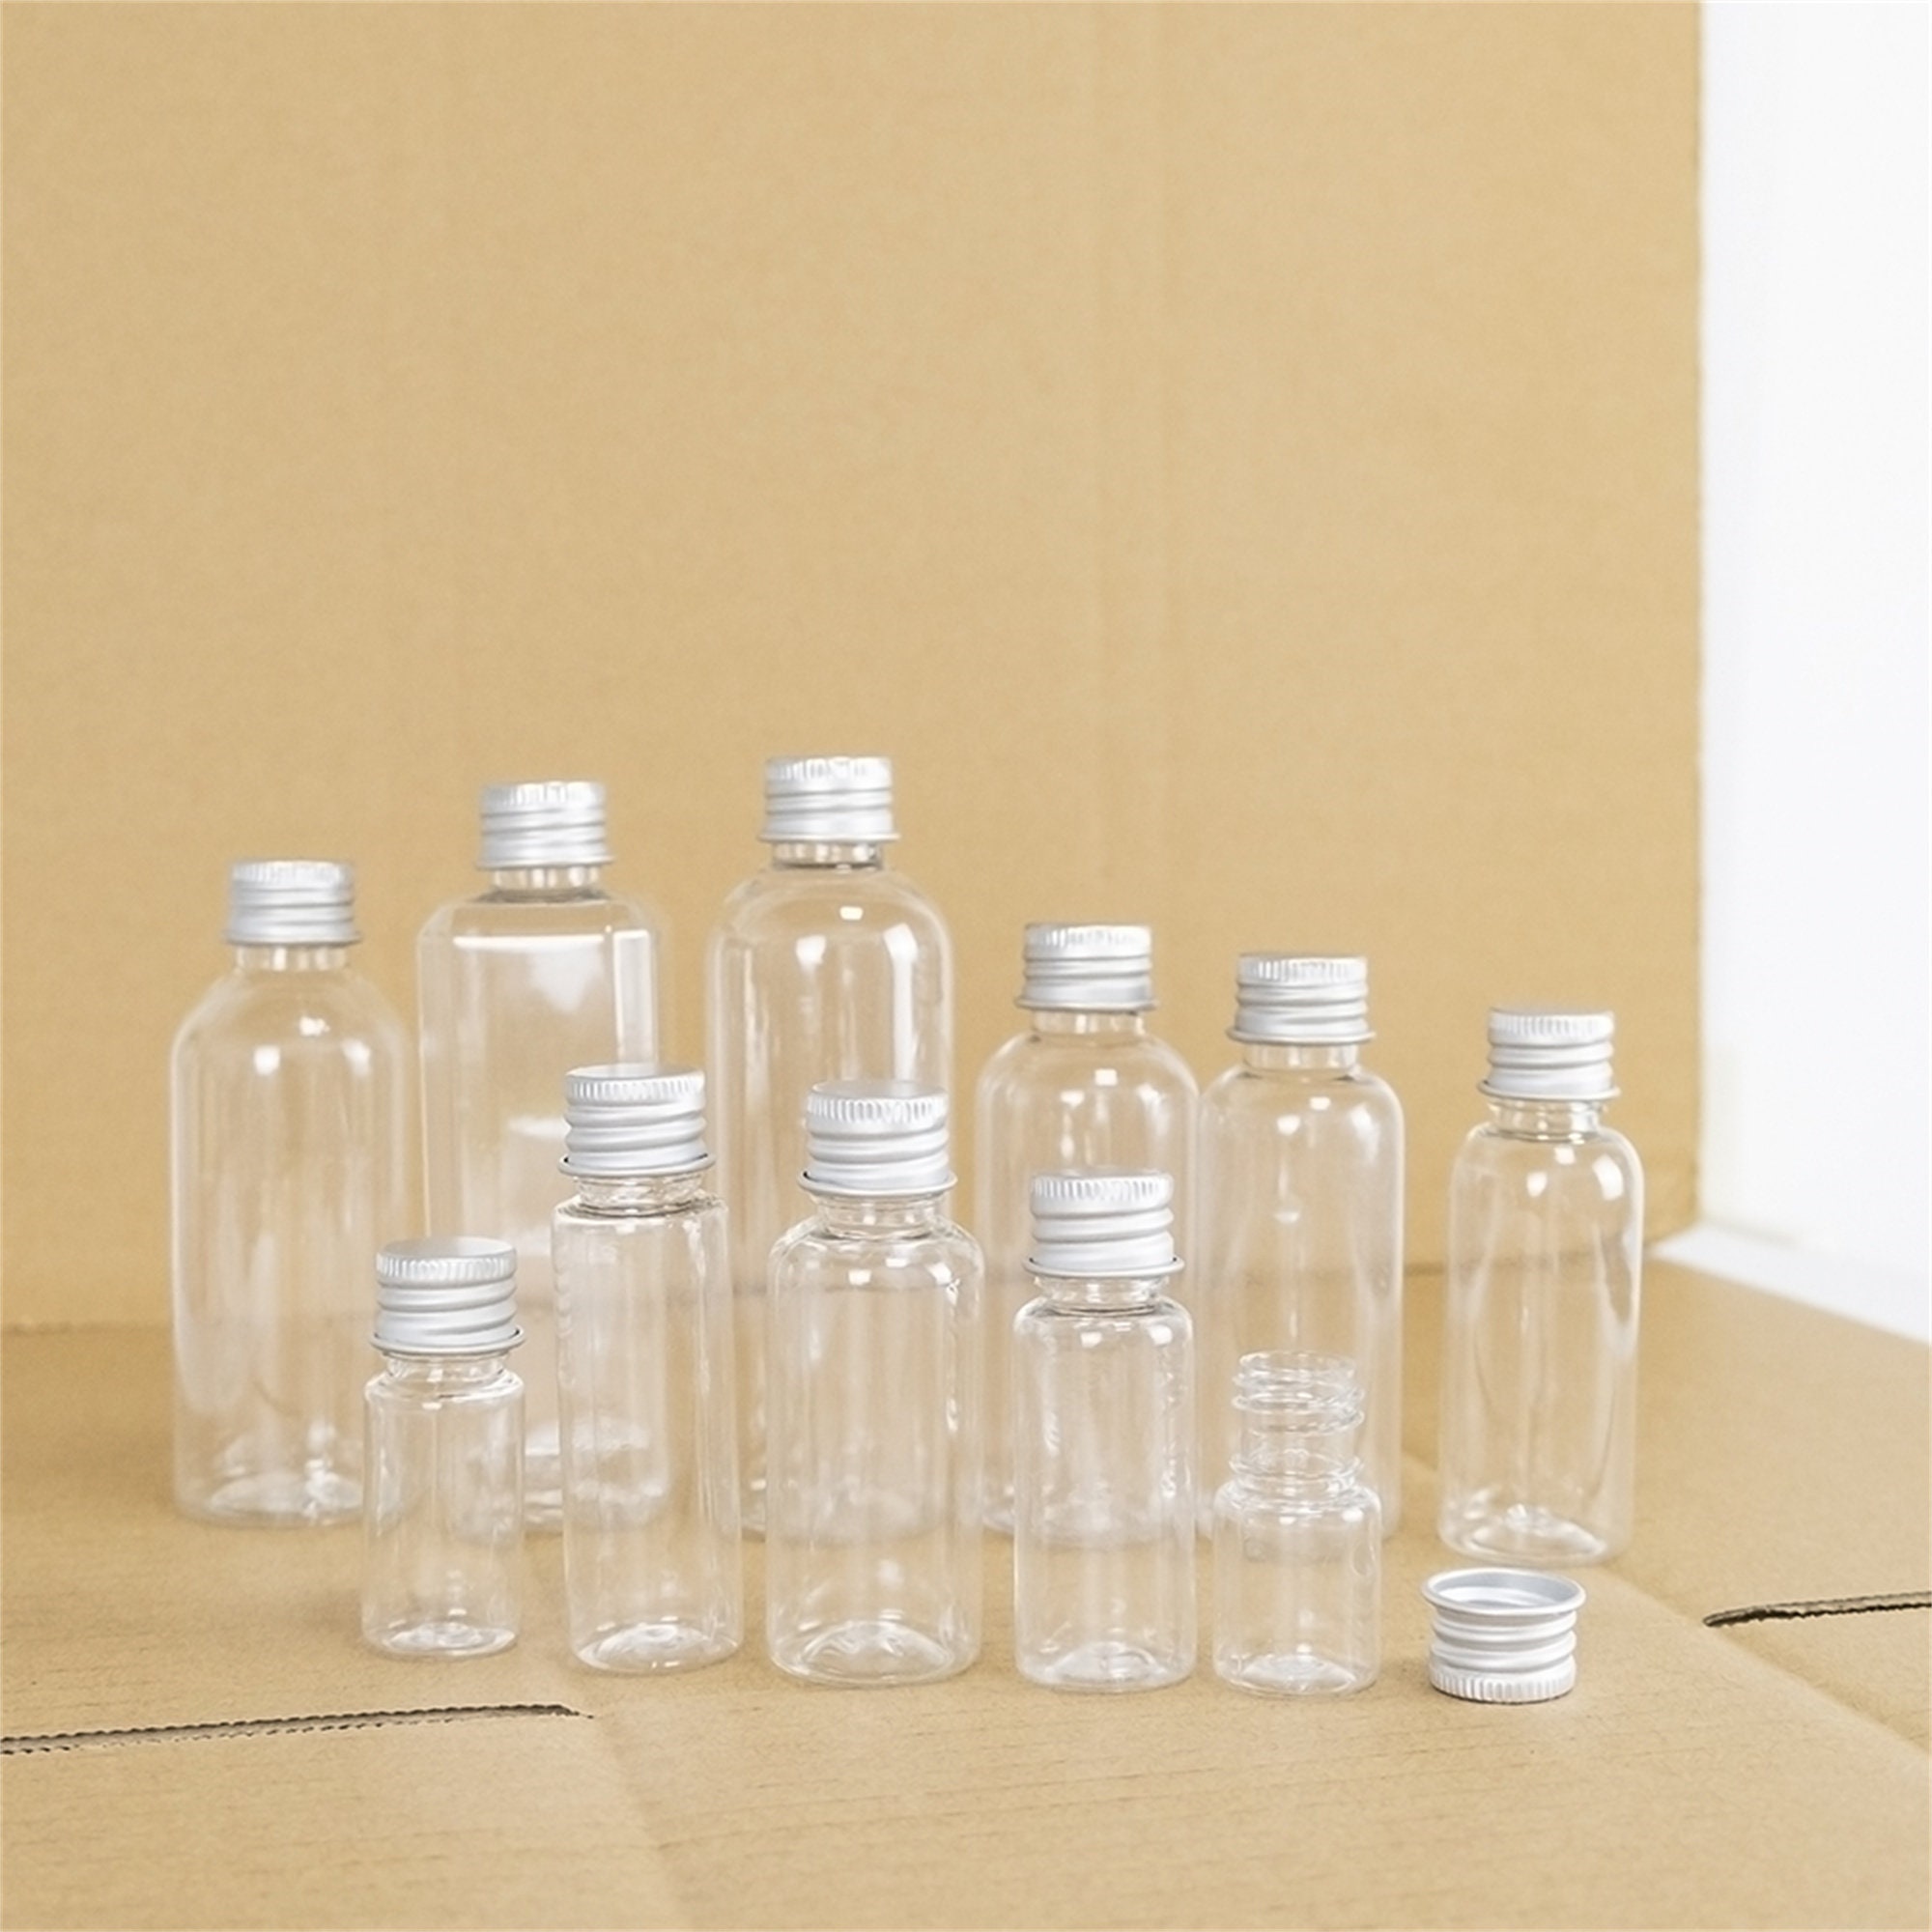 10pcs Travel Size Plastic Bottles Empty Small Vials Screw Lid Refillable Containers for Powder Liquids (30ml), Multicolor